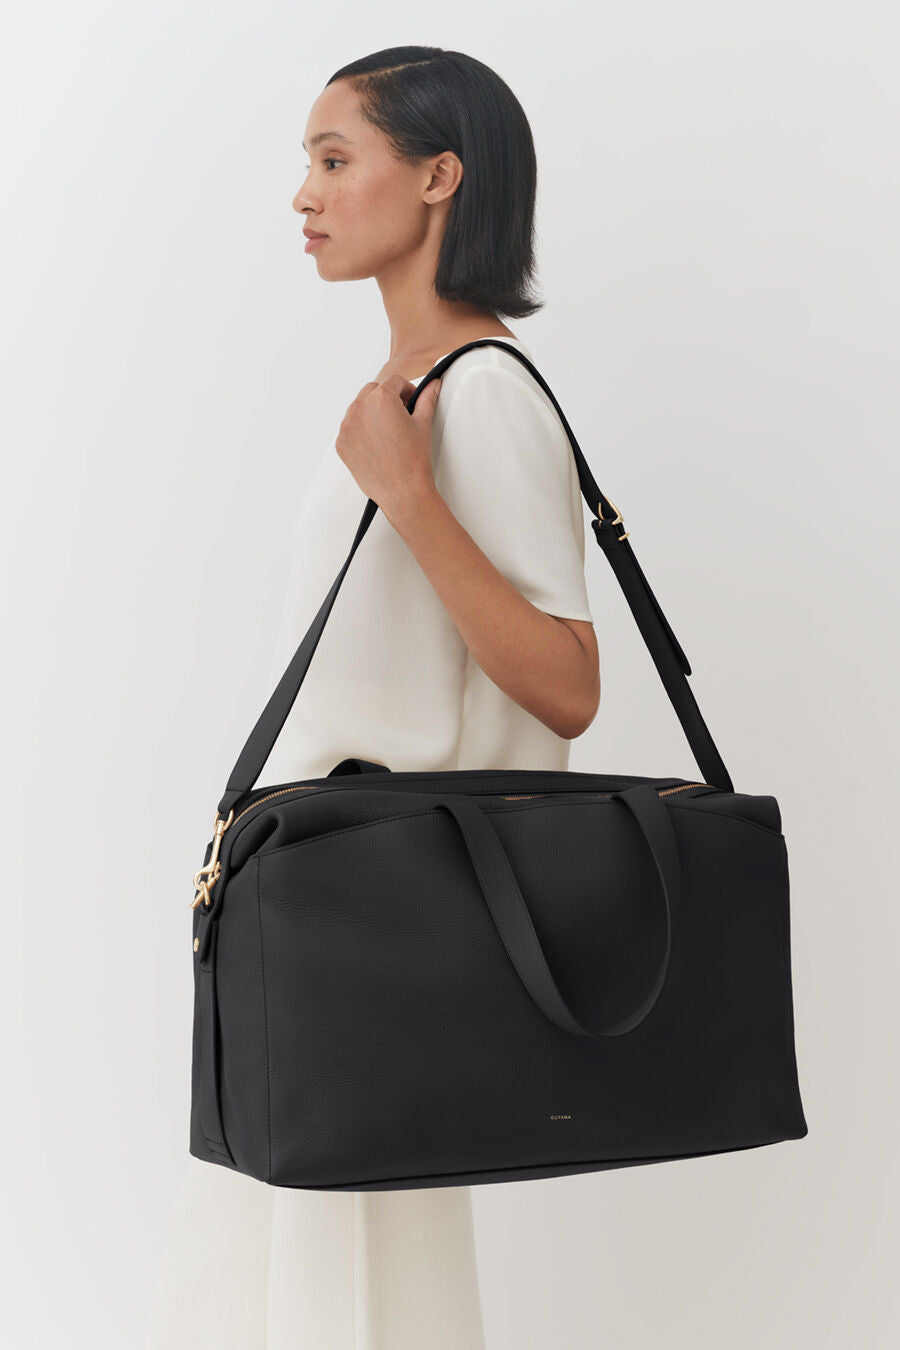 Cuyana Women's Leather Exterior Bags & Handbags